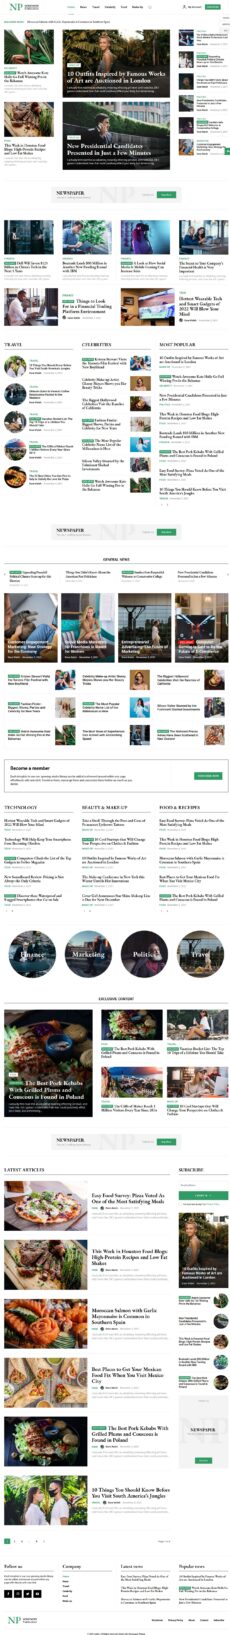 Publication Pro - Newspaper demo by tagDiv - News web design